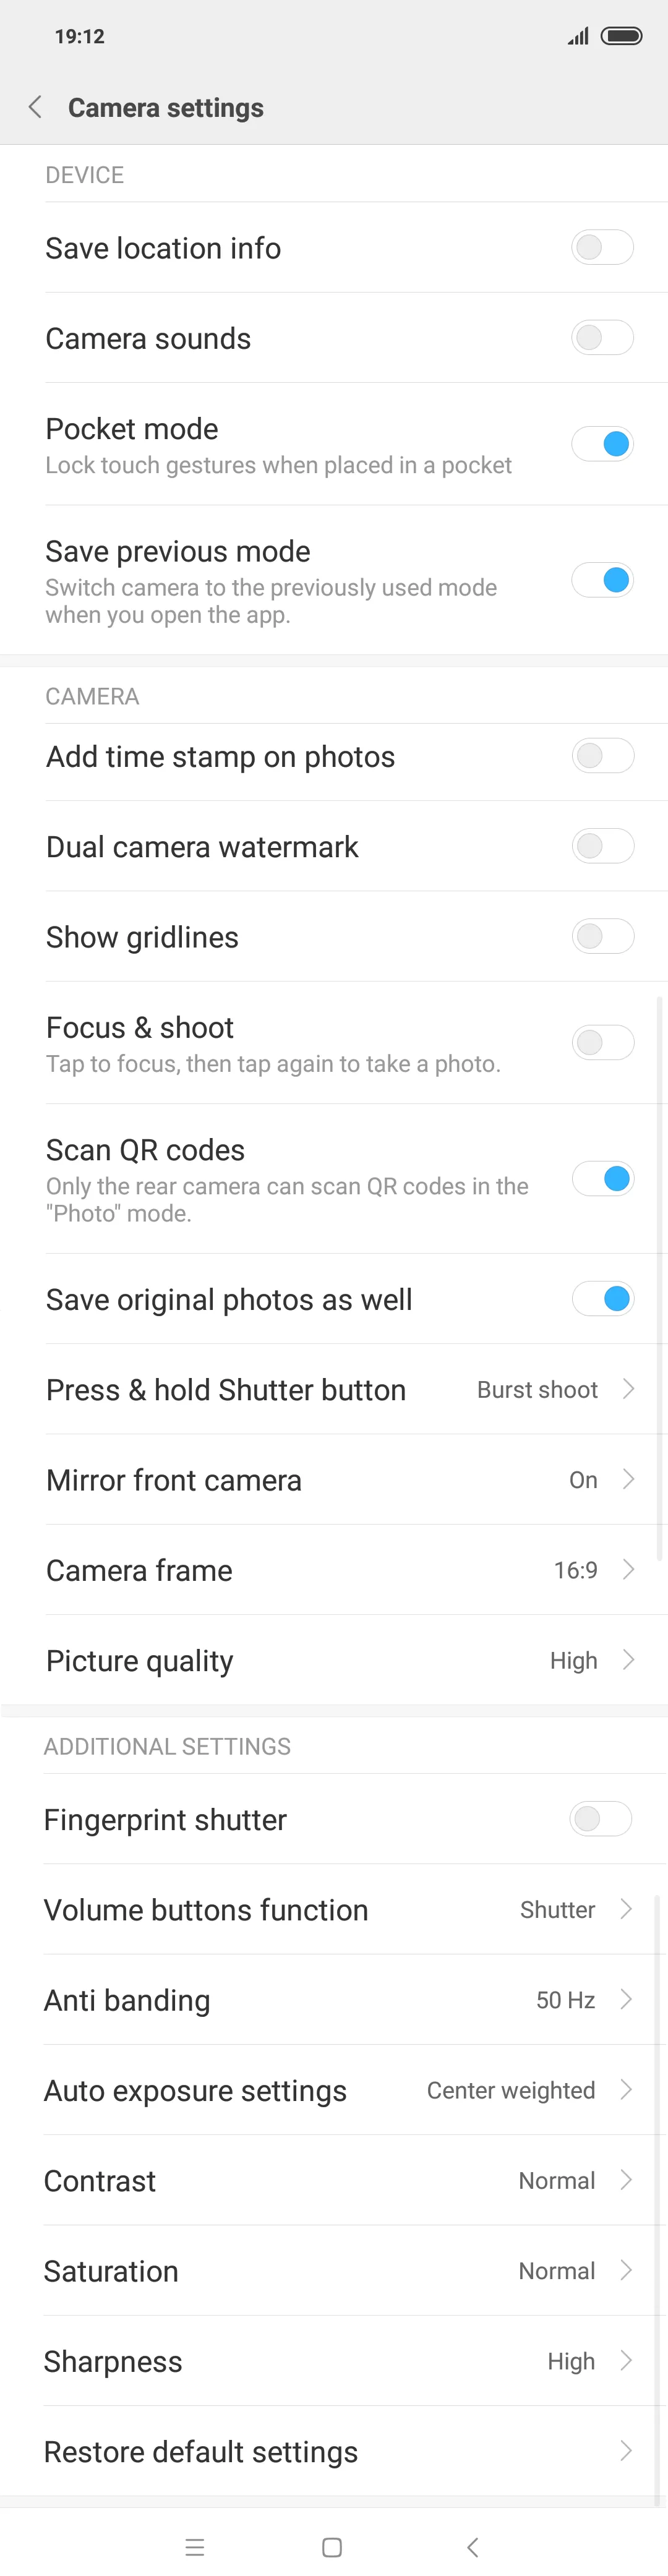 Xiaomi Mi 8 9Global version) camera settings